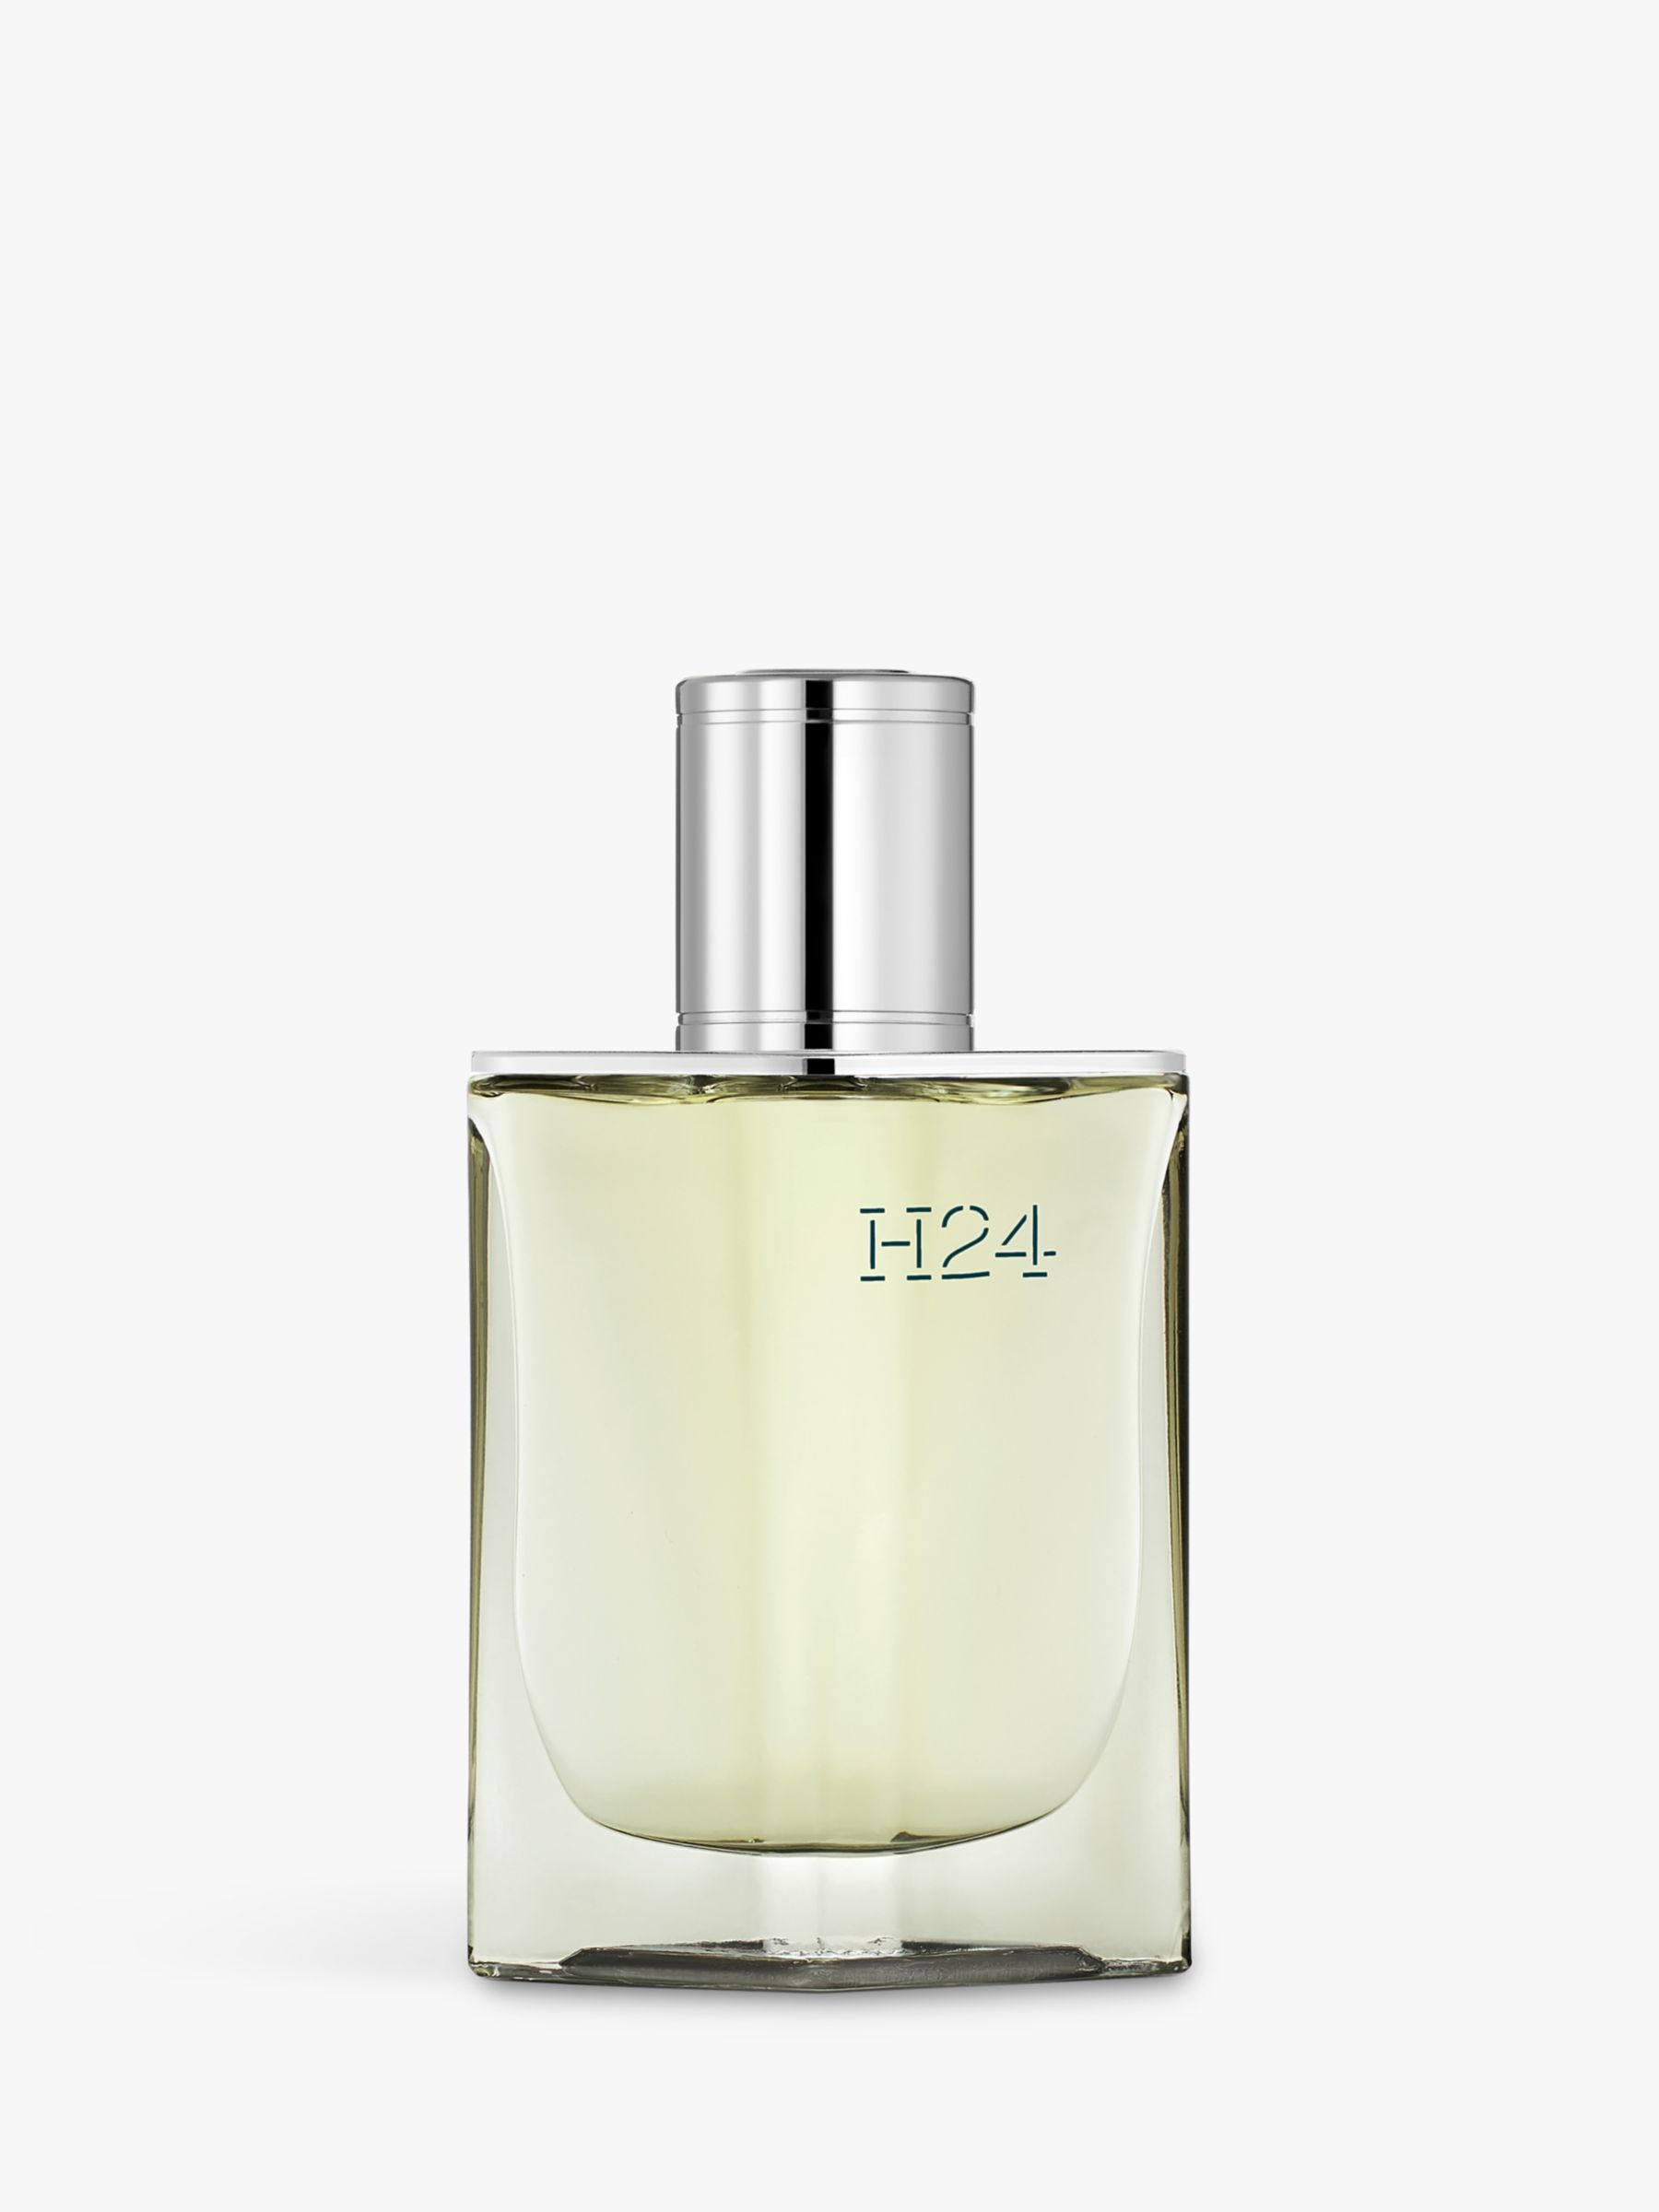 Hermès H24 Eau de Parfum Natural Spray, Refillable, 50ml at John Lewis